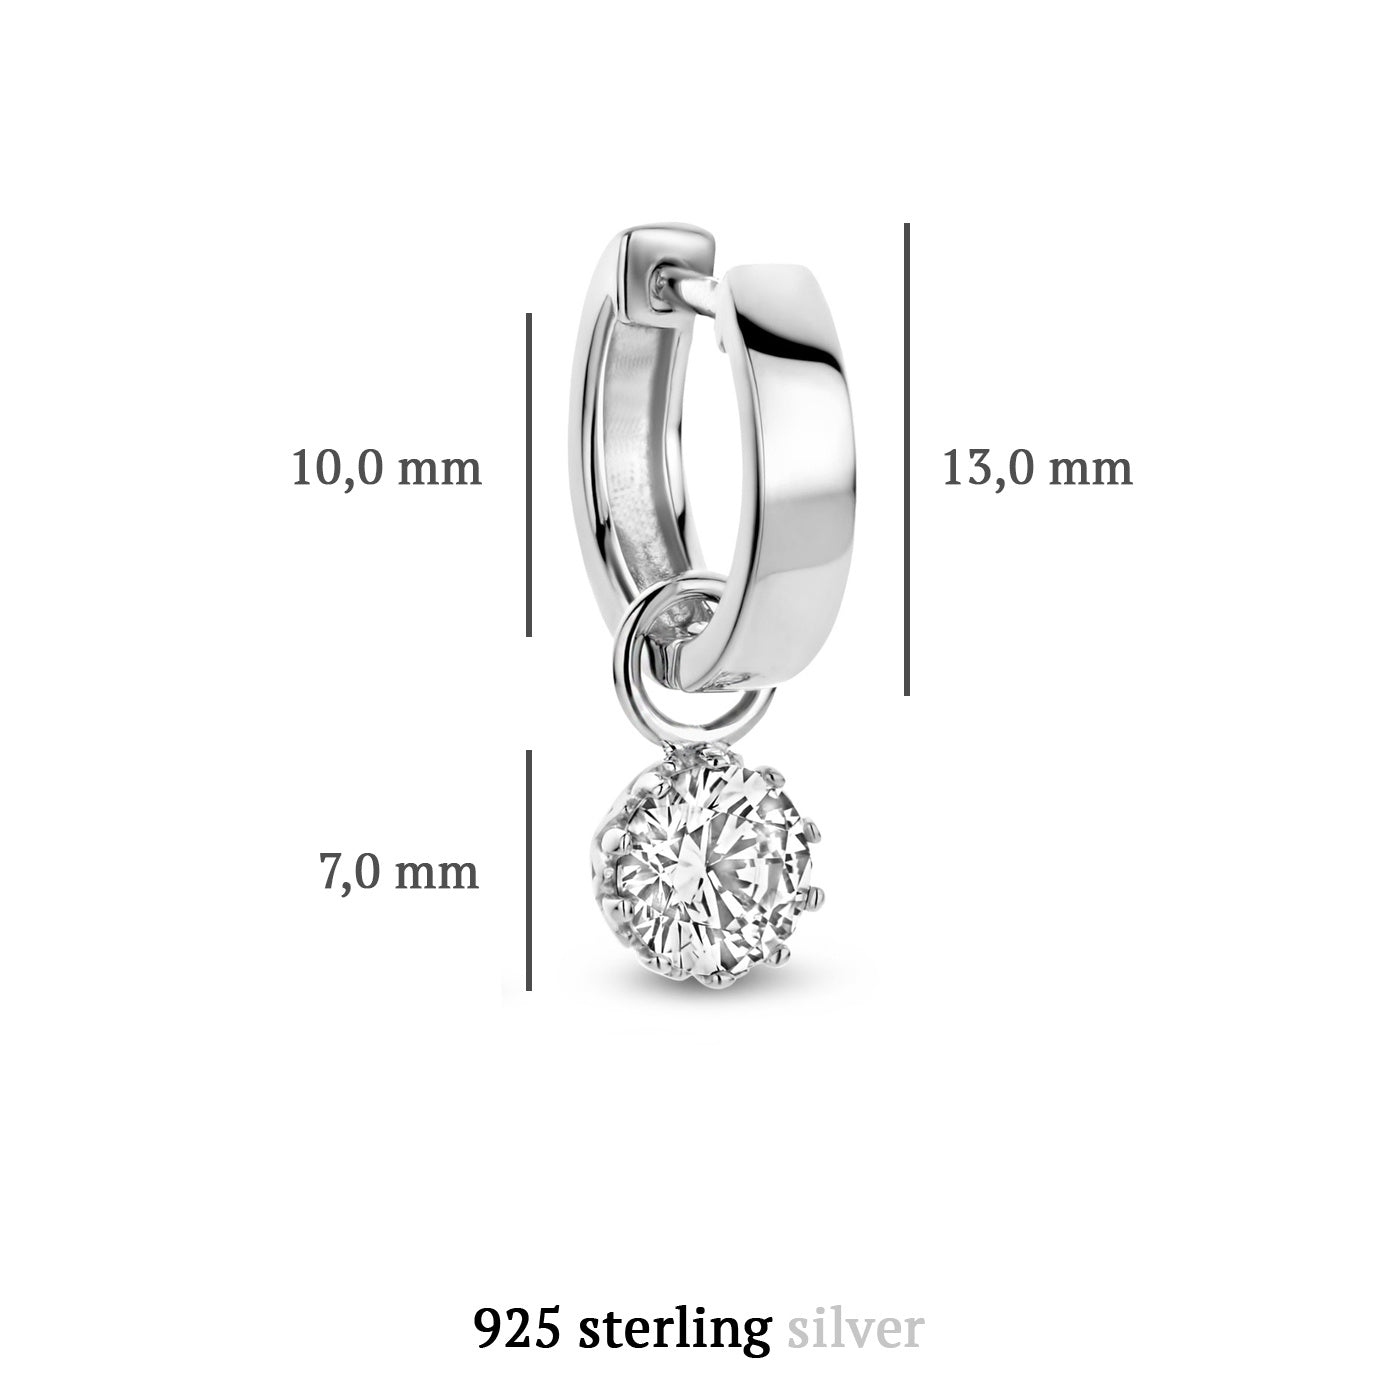 Cento Luci Rosia creole in argento sterling 925 con pietra zircone